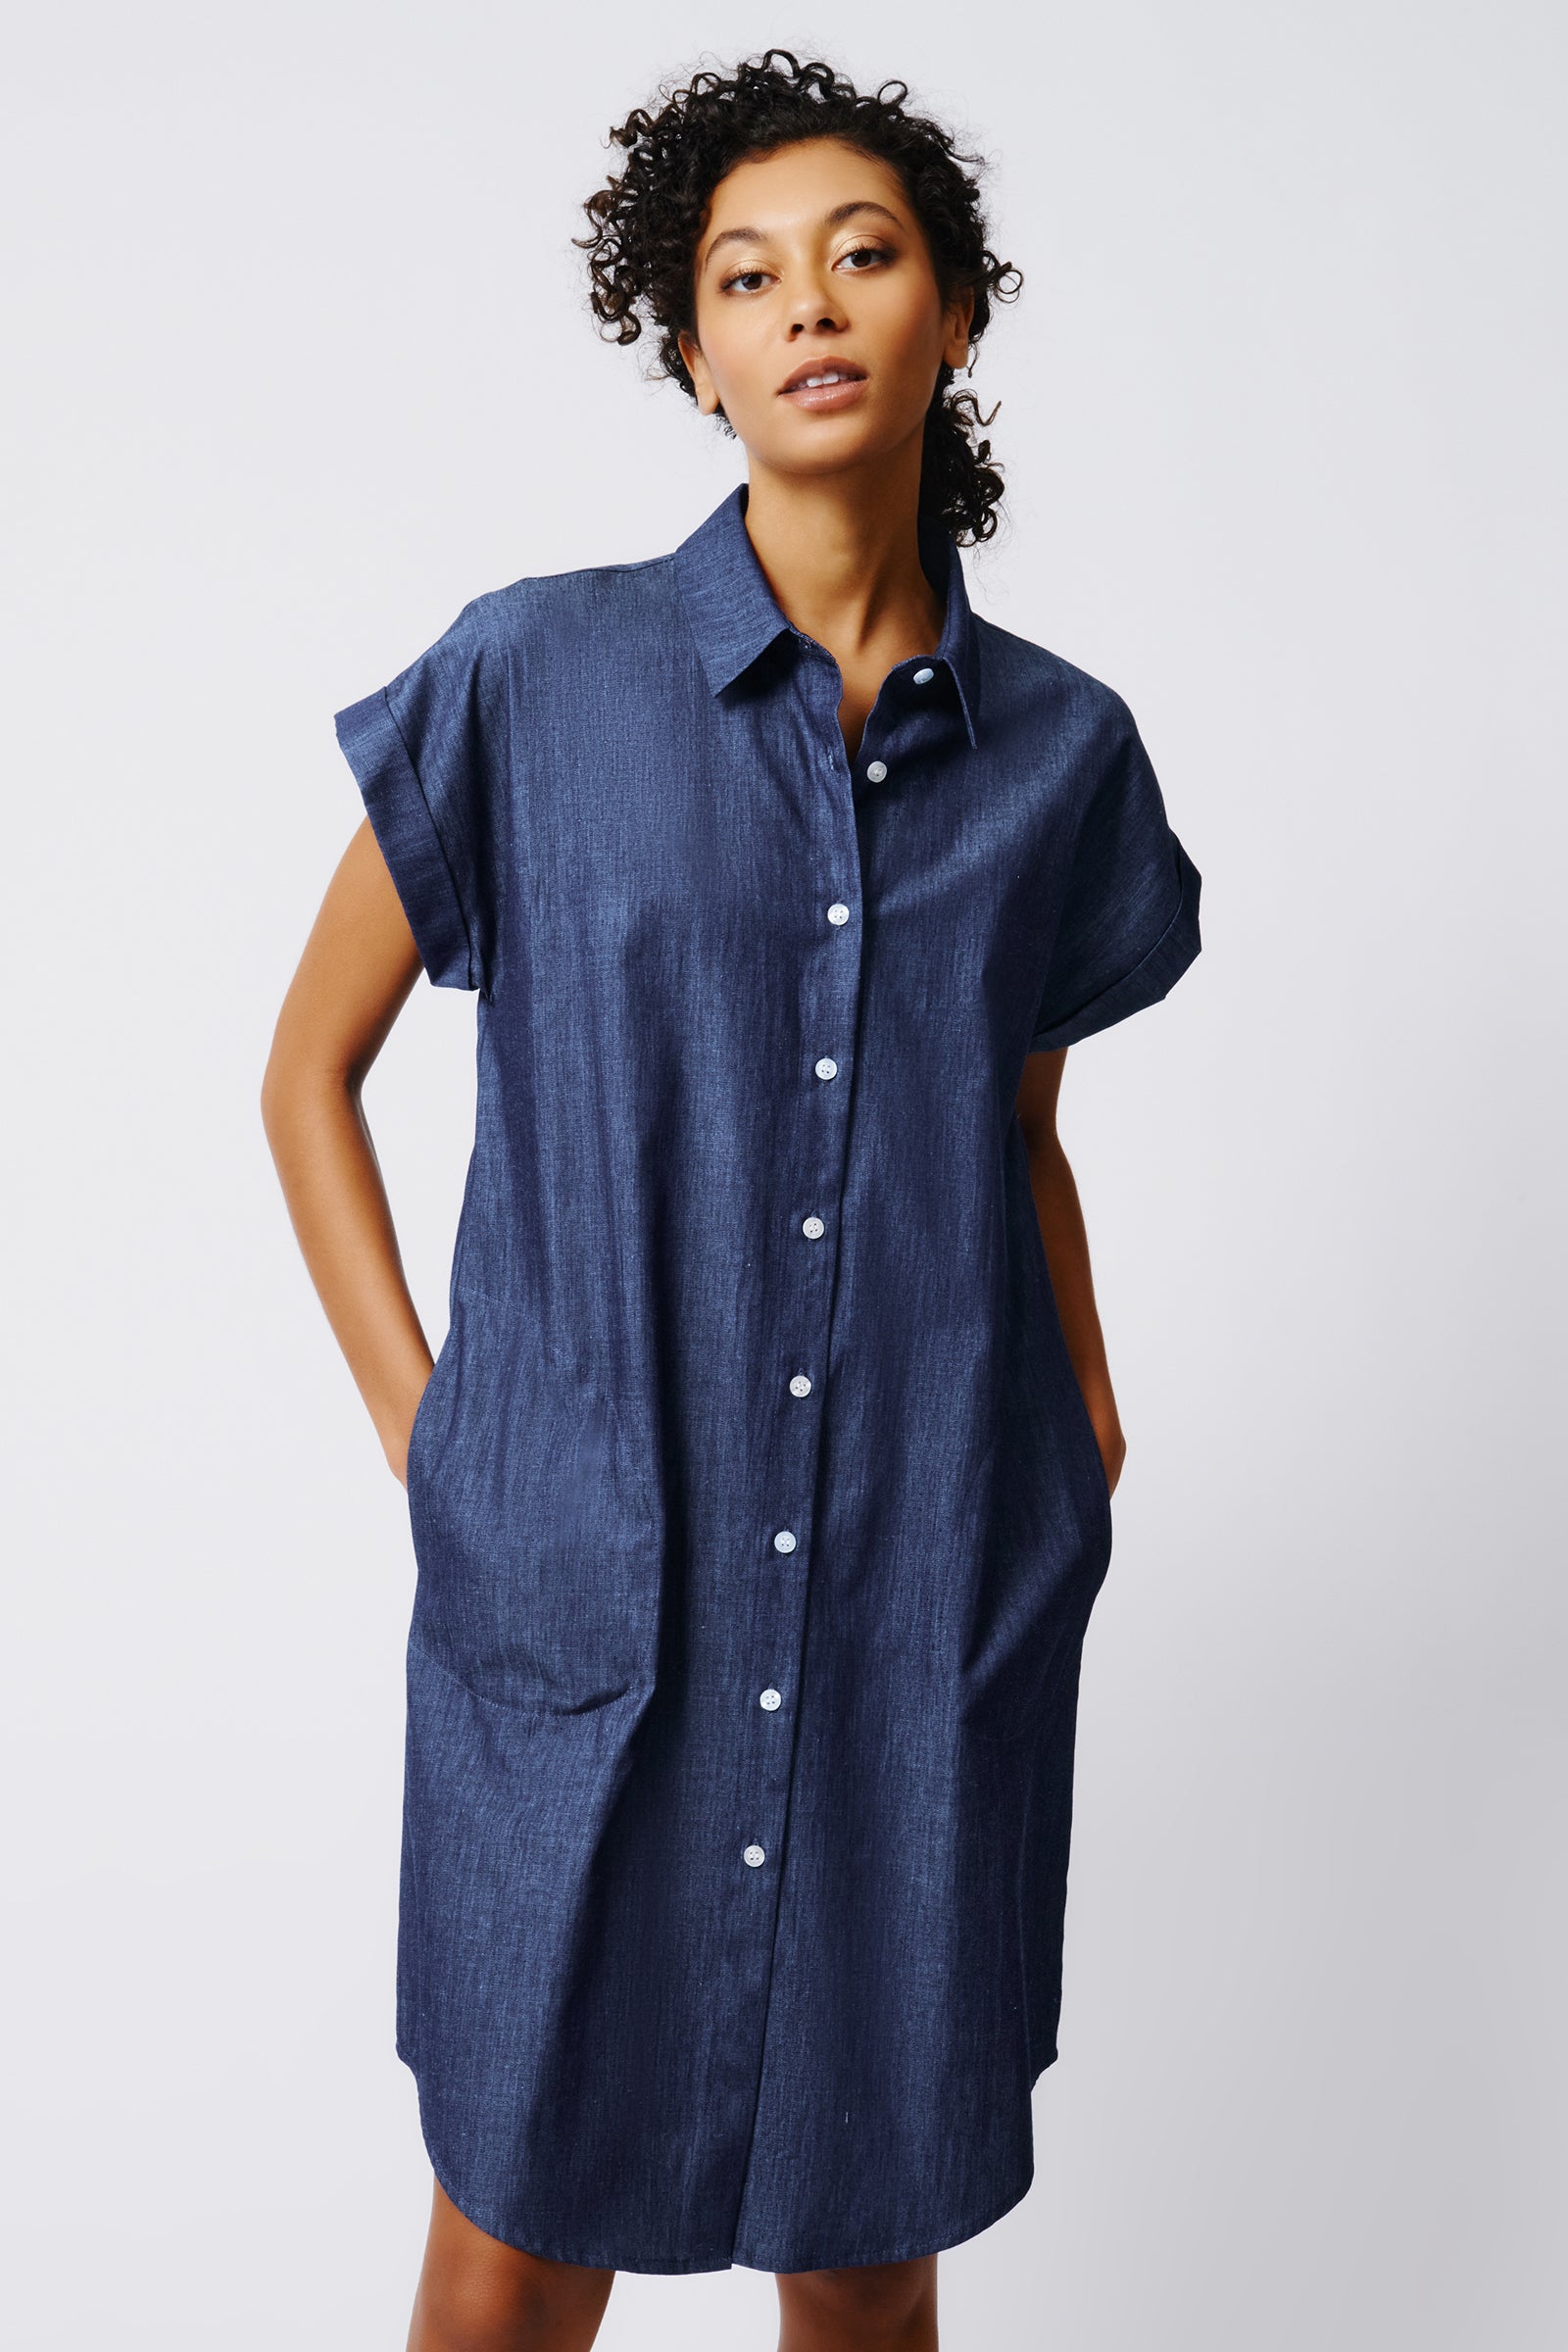 Hedy Cuffed Cap Sleeve Shirt Dress in Classic Cotton Indigo – KAL RIEMAN